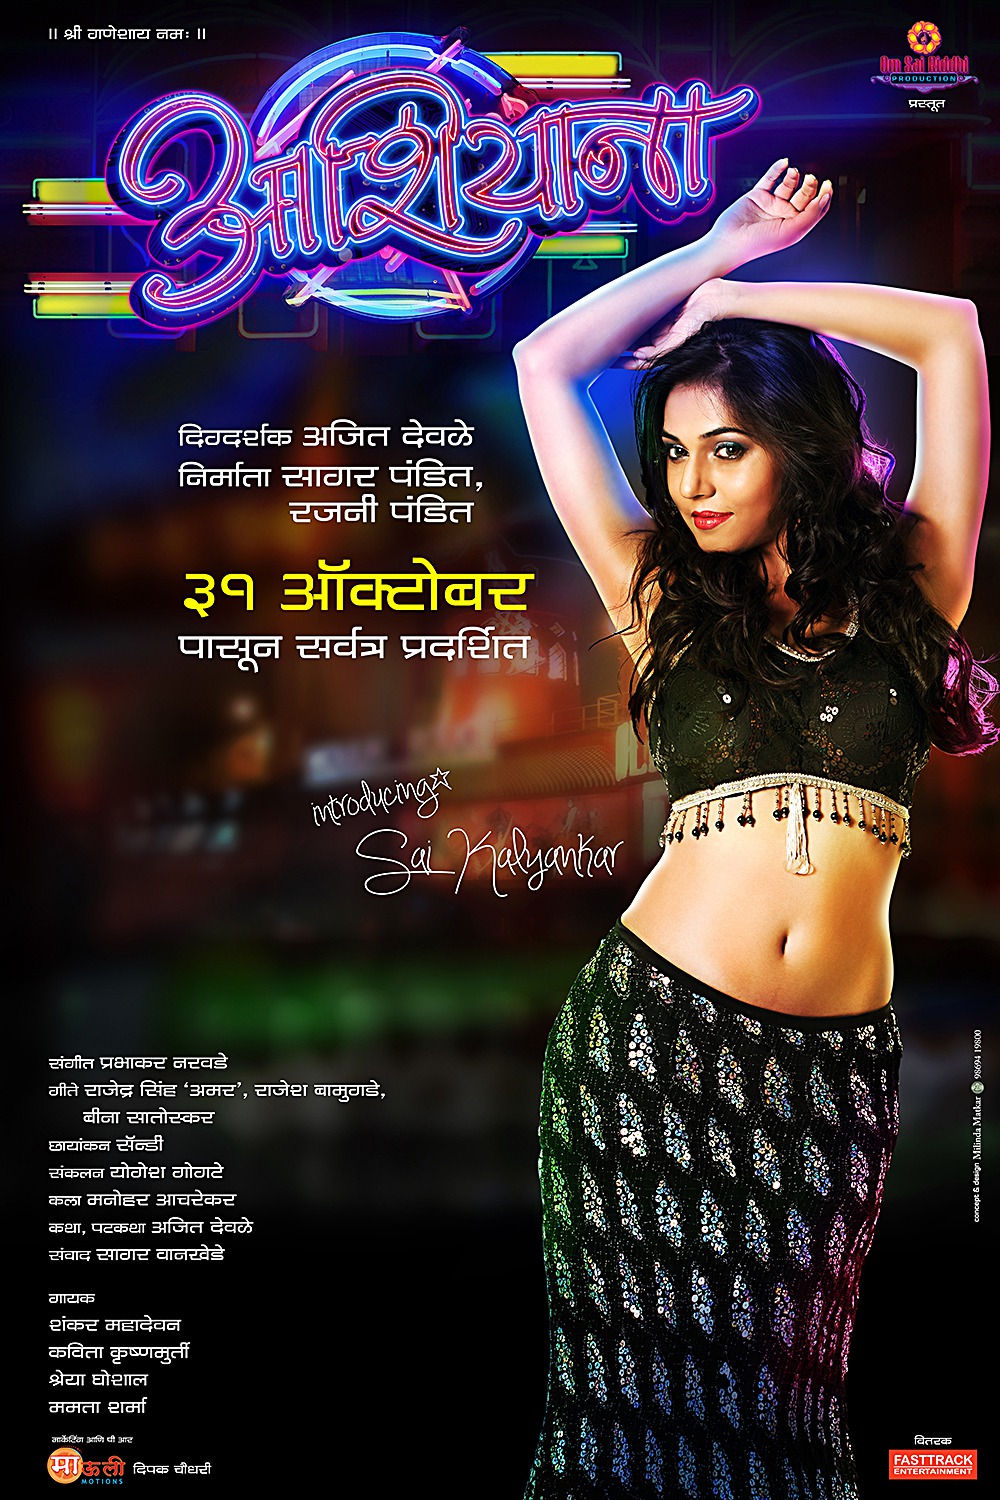 Extra Large Movie Poster Image for Aashiyana (#6 of 9)